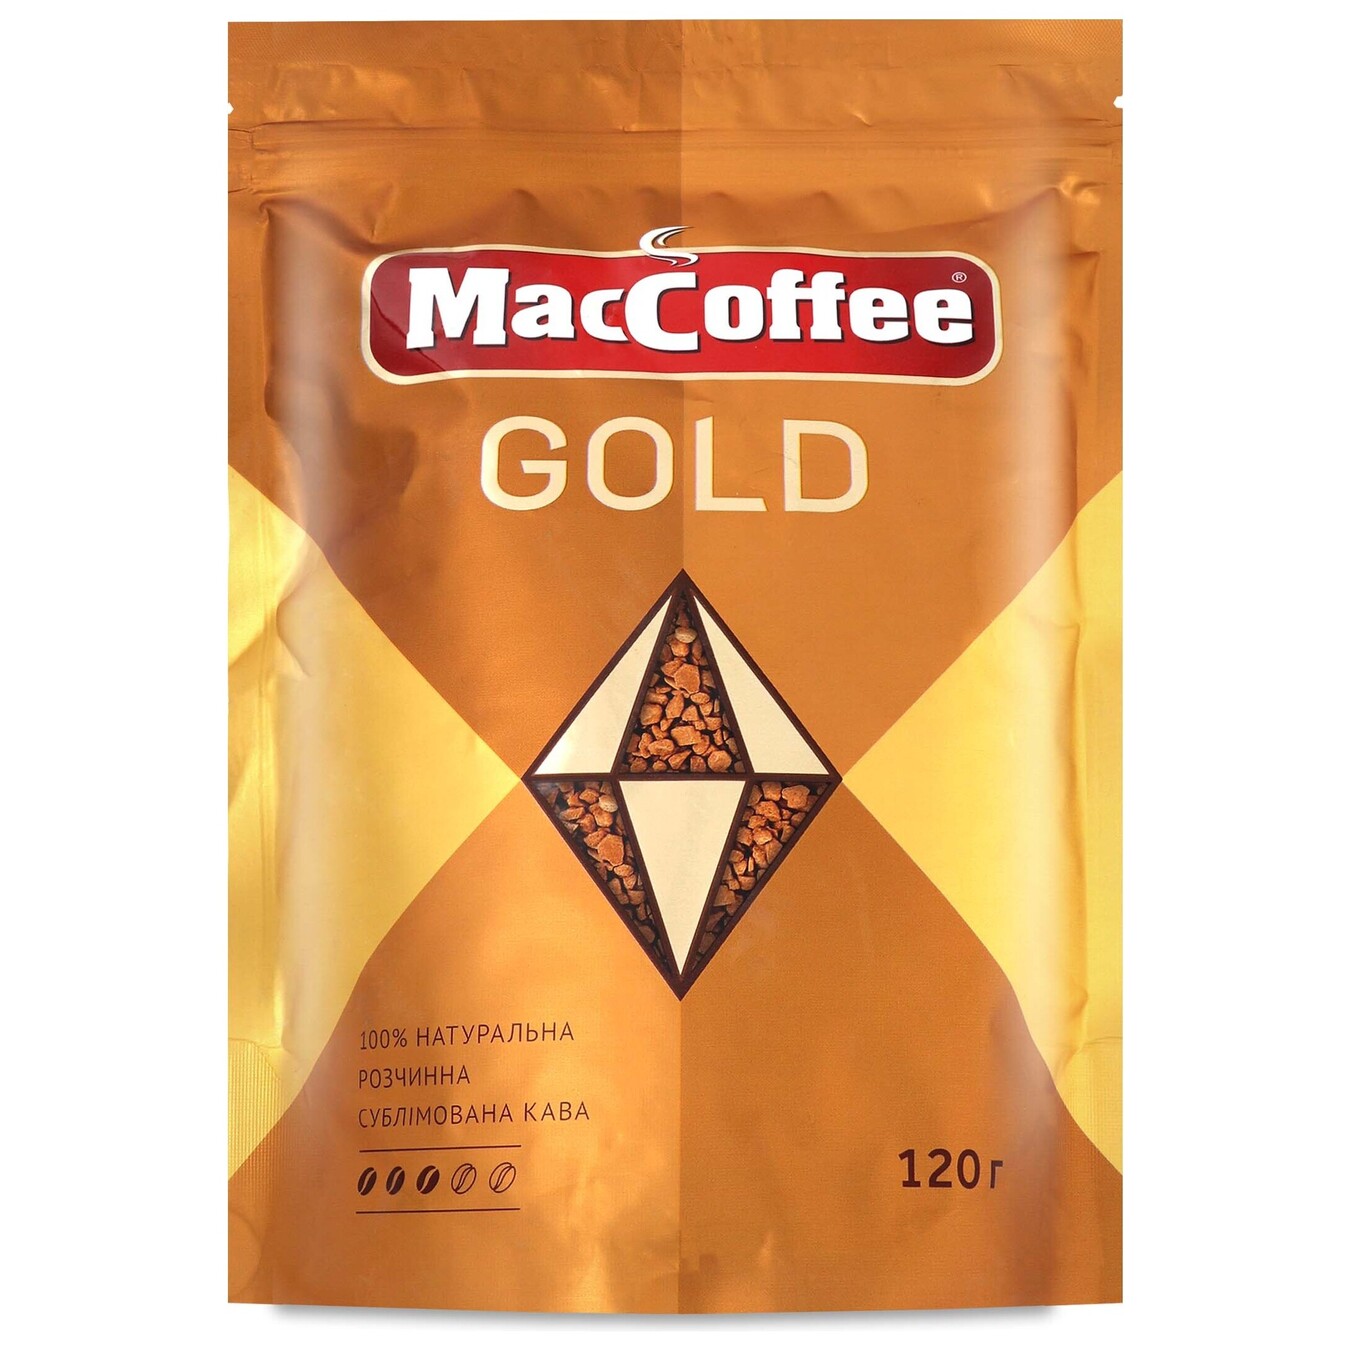 Instant coffee Gold MacCoffee 120g